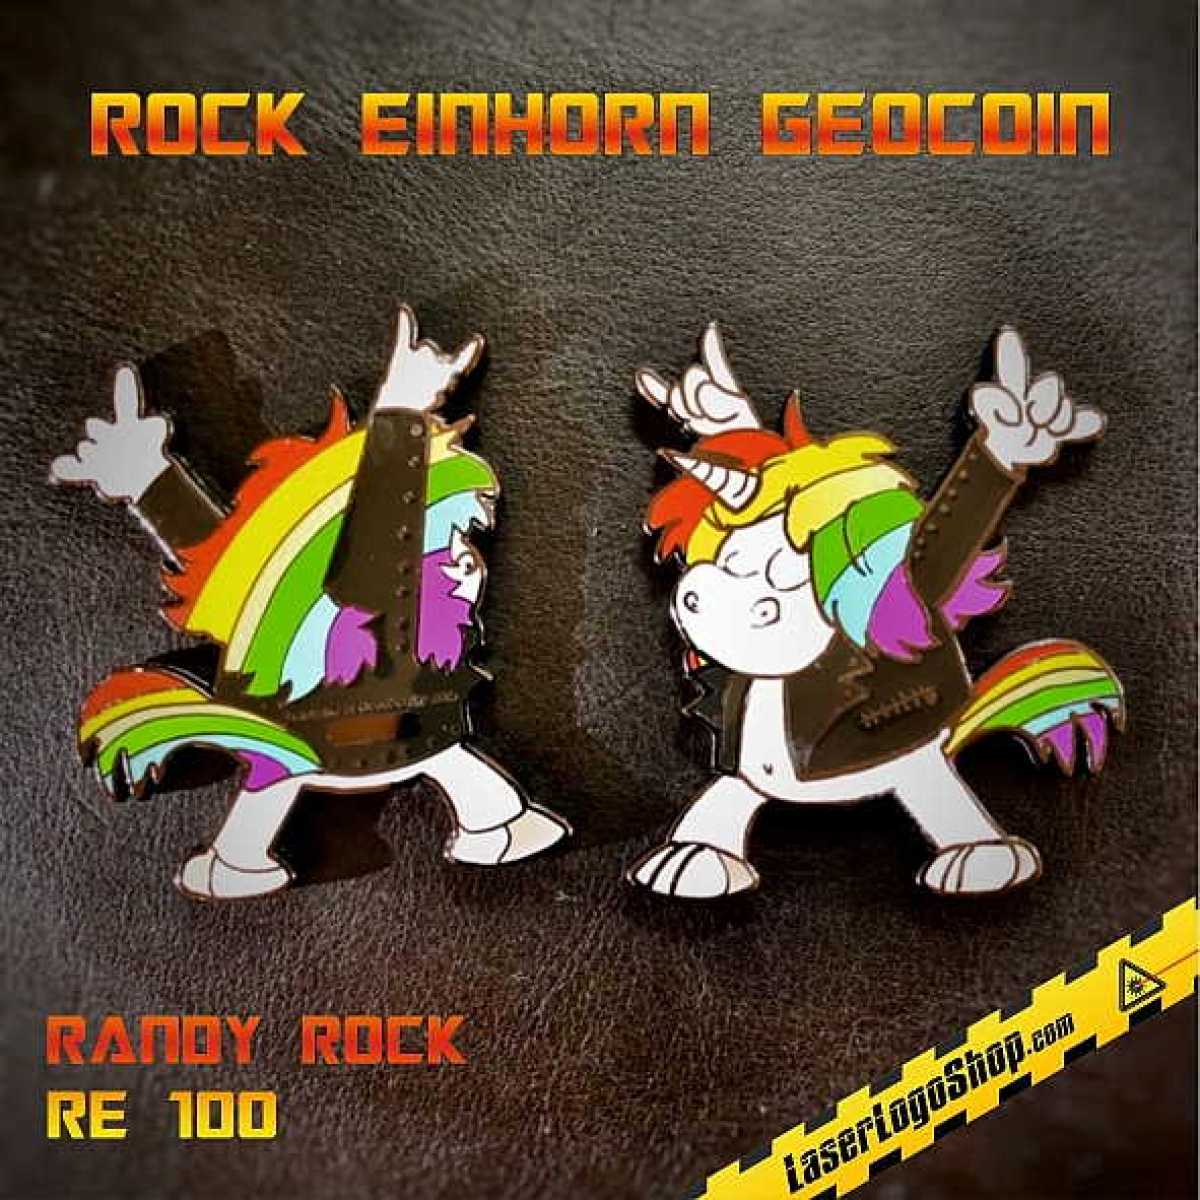 Rock Einhorn Geocoin "Randy Rock" RE 100